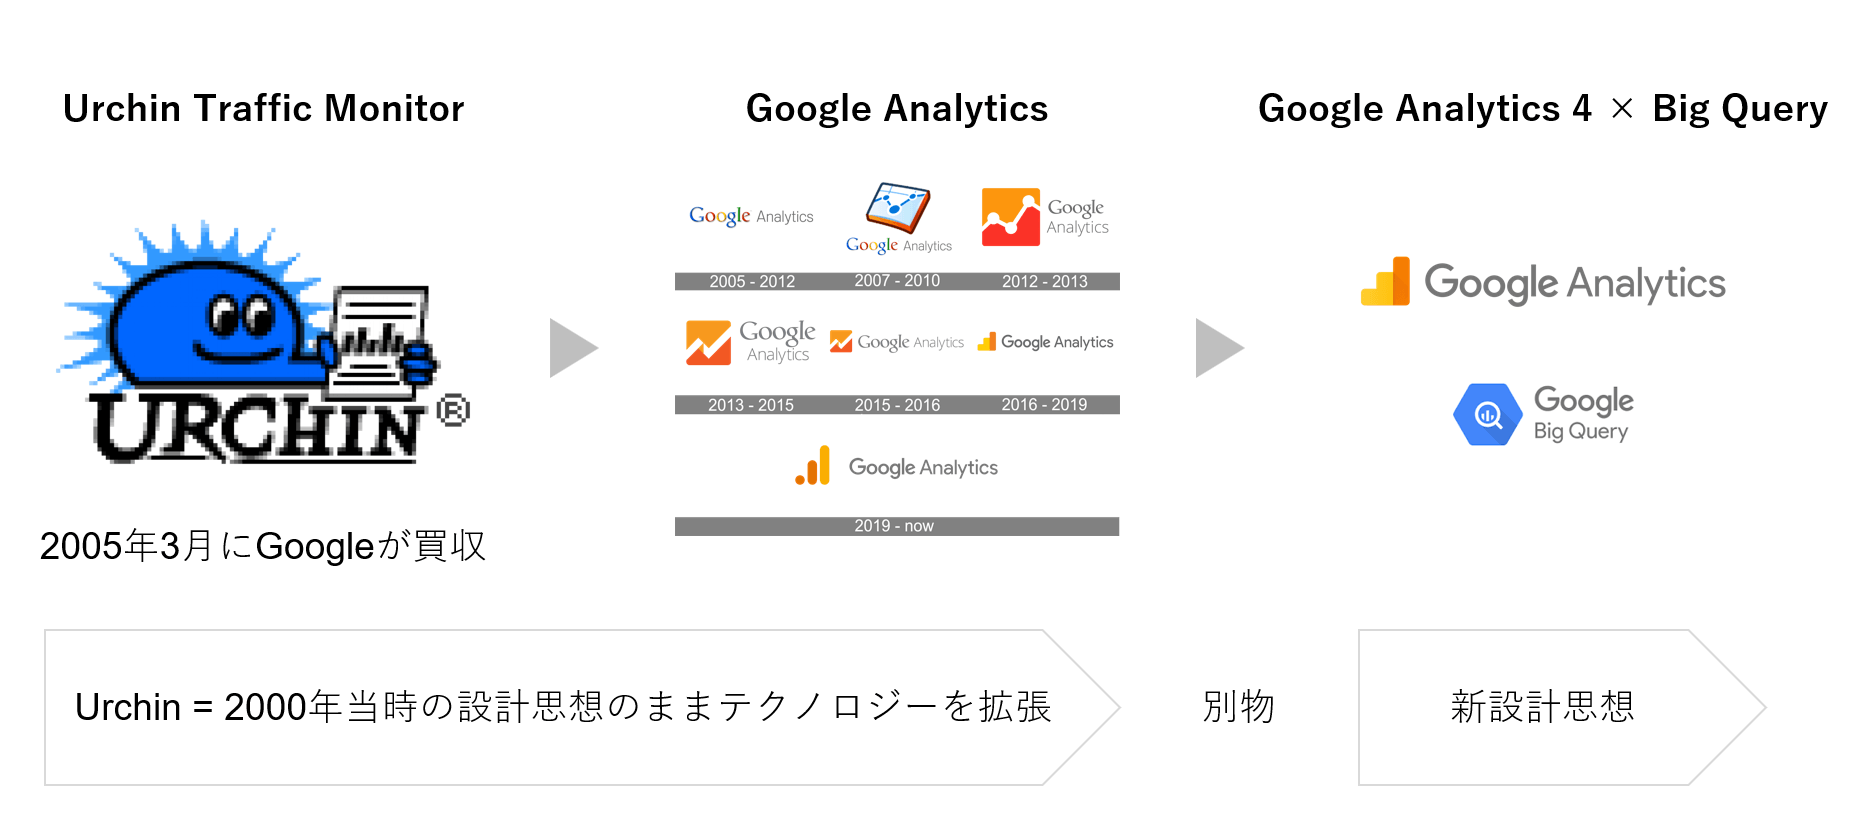 Google Analyticsの歴史から読み解く設計思想の転換